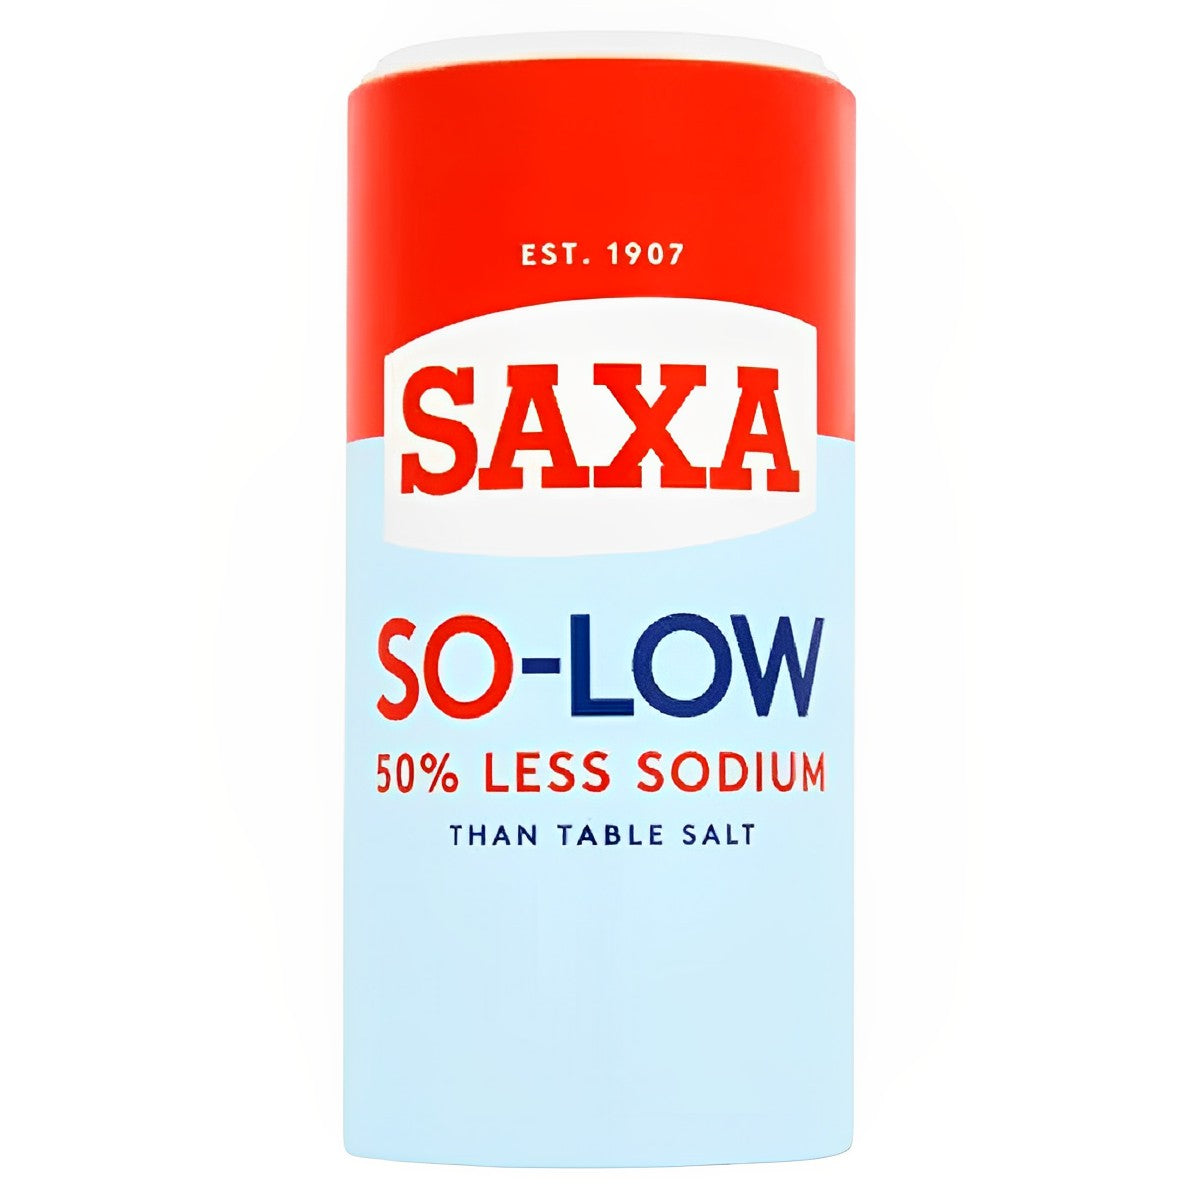 Saxa - So-Low Reduced Sodium Salt - 350g - Continental Food Store